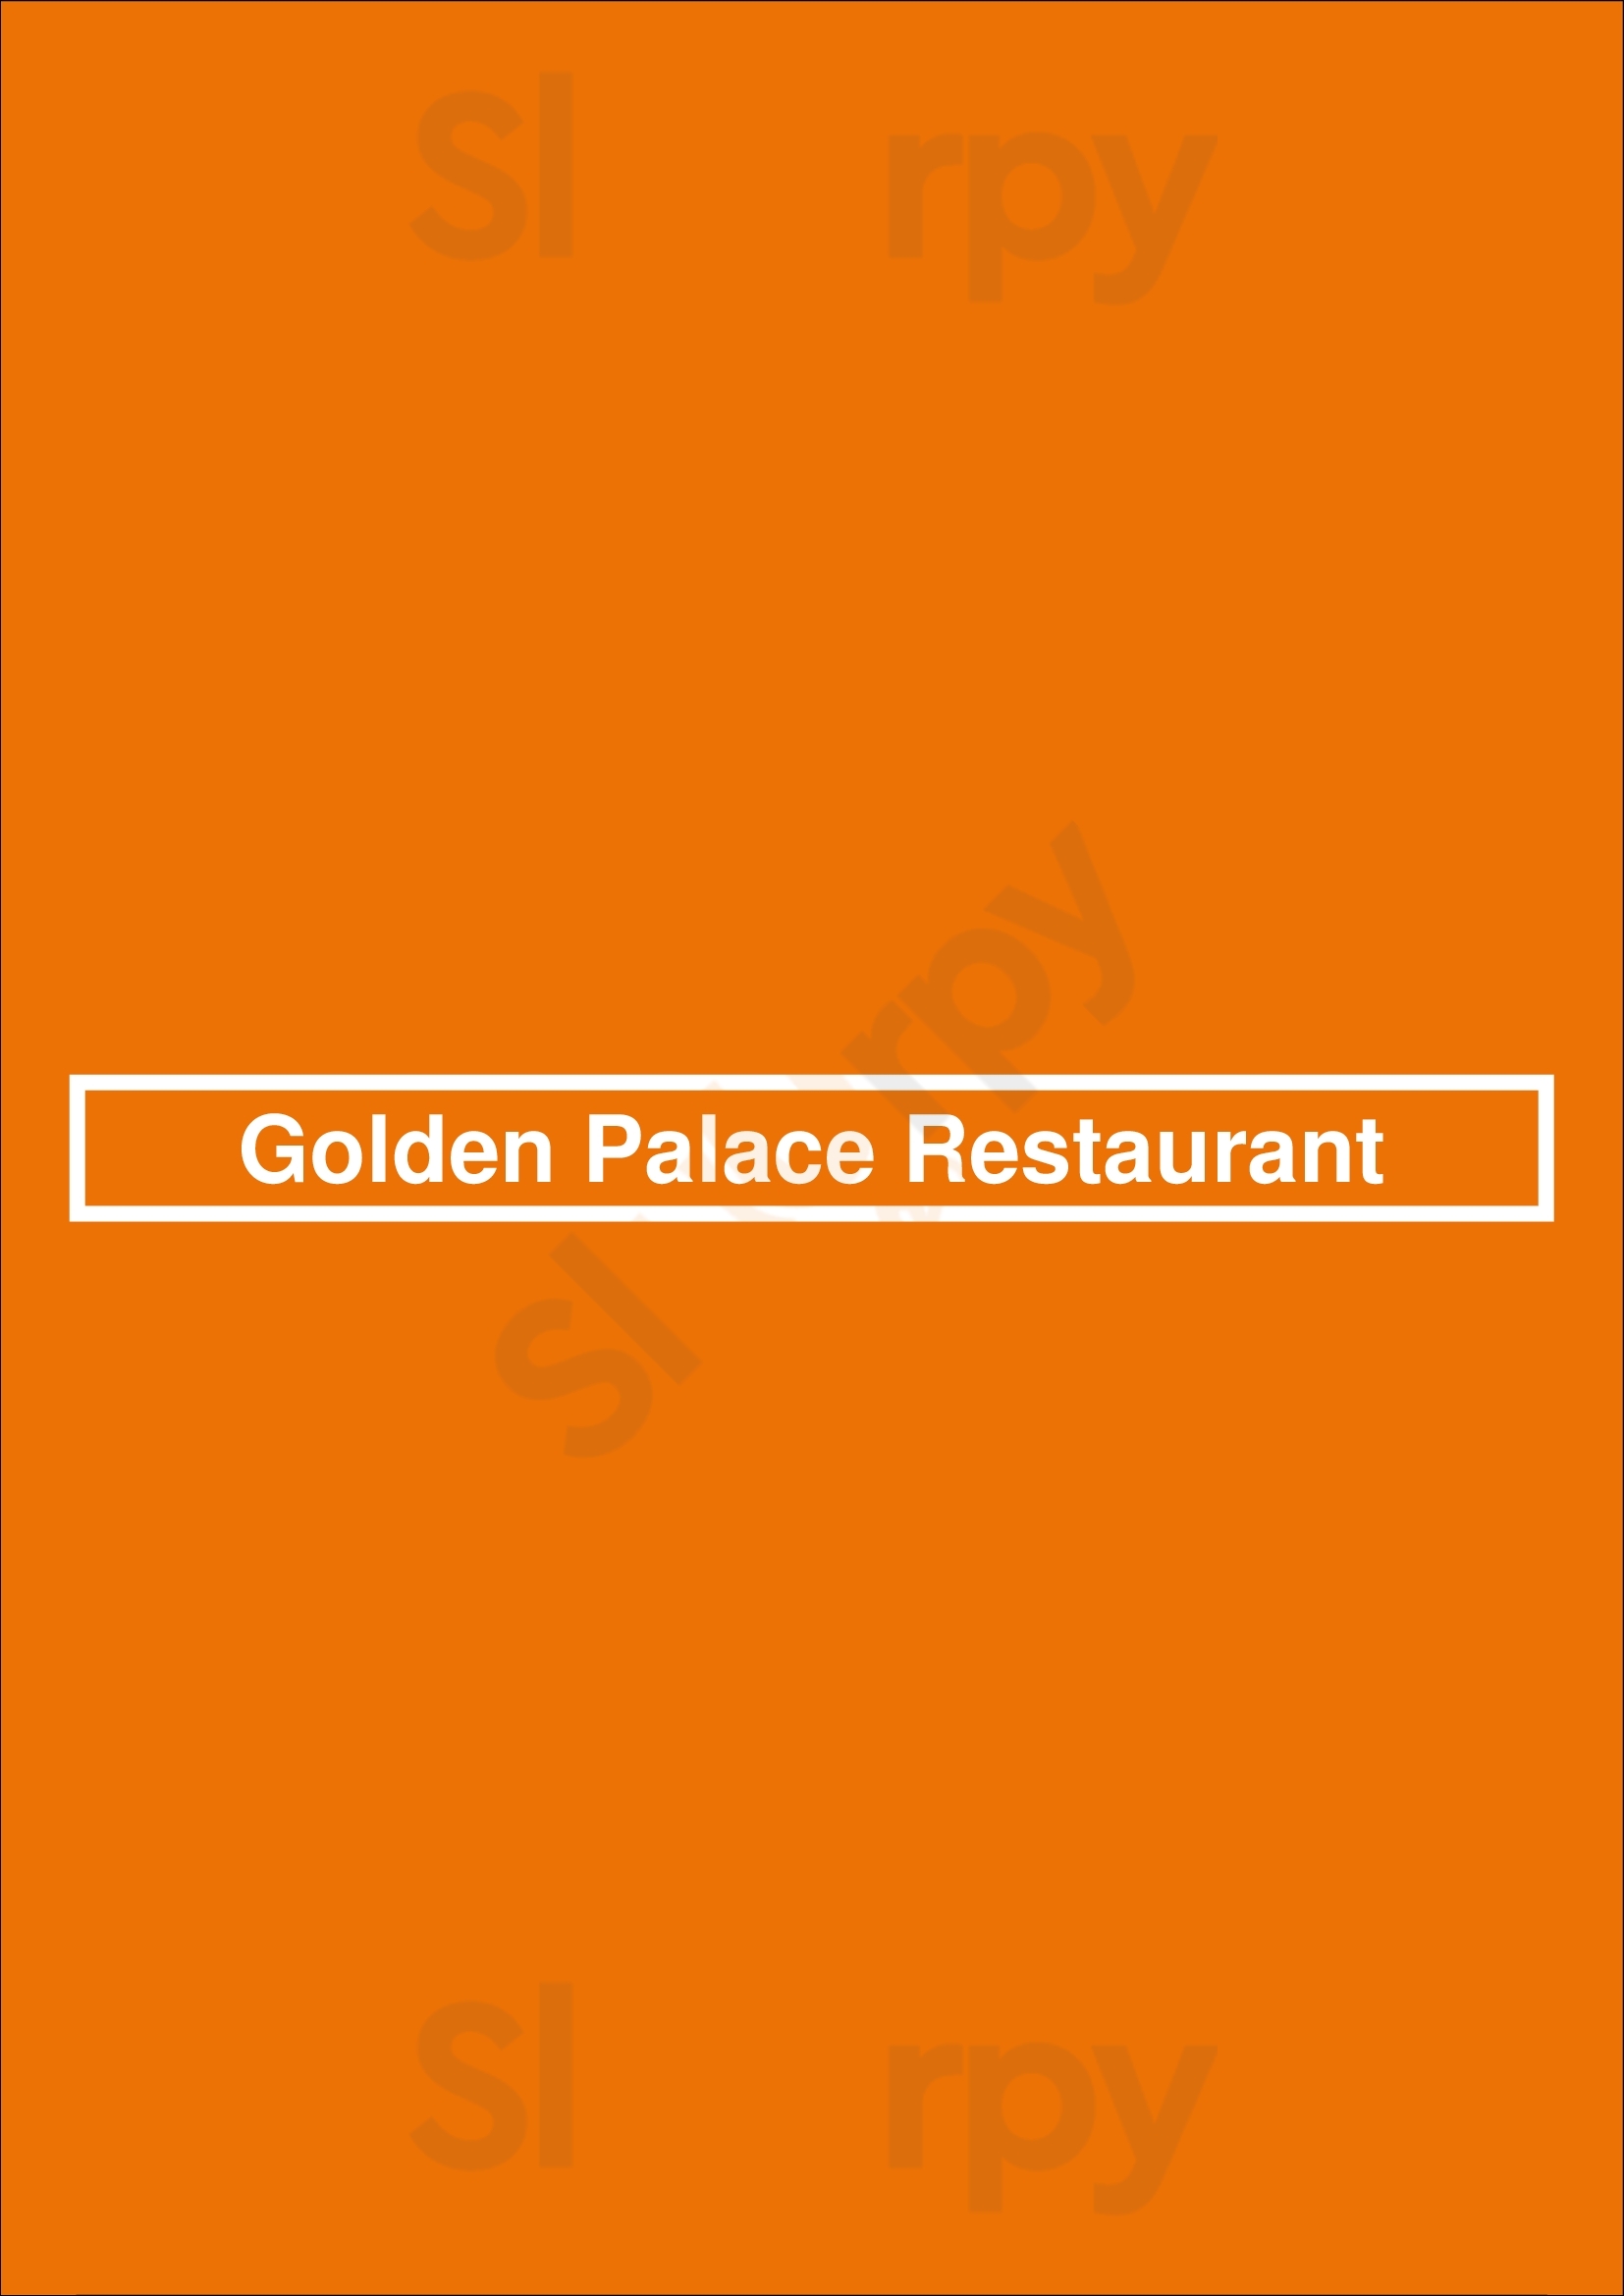 Golden Palace Restaurant Brampton Menu - 1